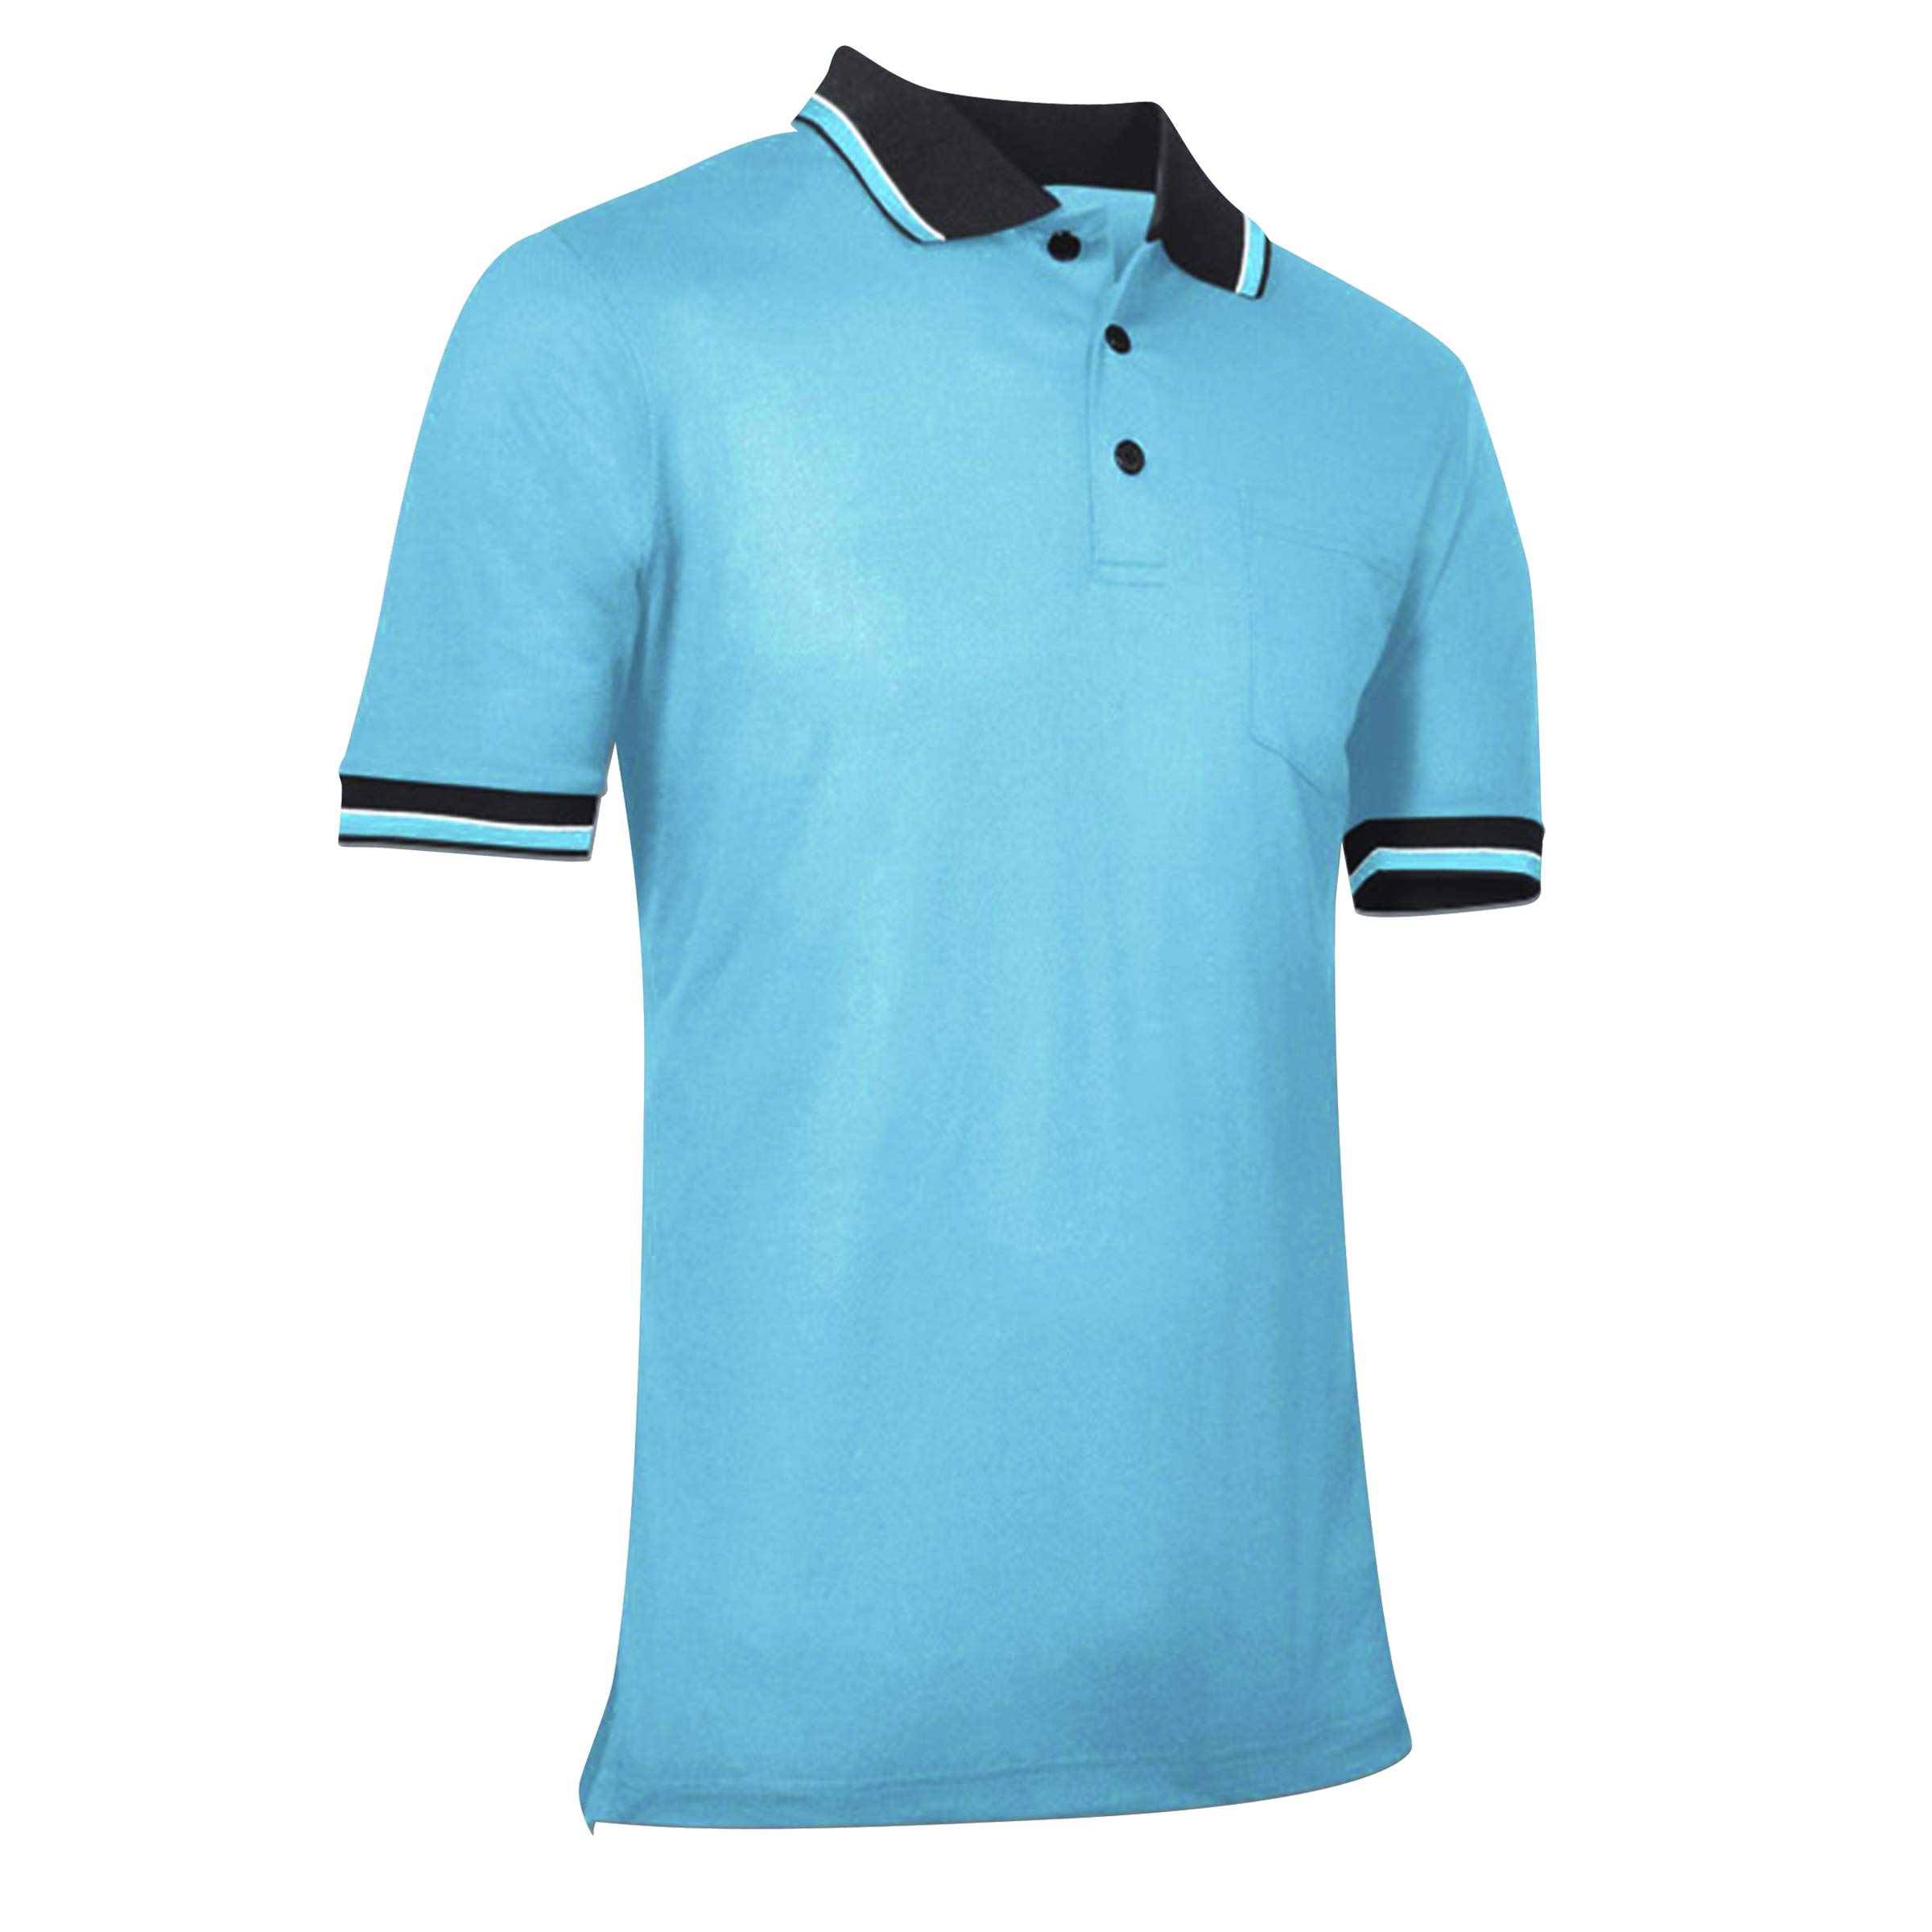 CHAMPRO Mens Baseball Softball Umpire Polo Shirt Polyester, Light Blue, Large US